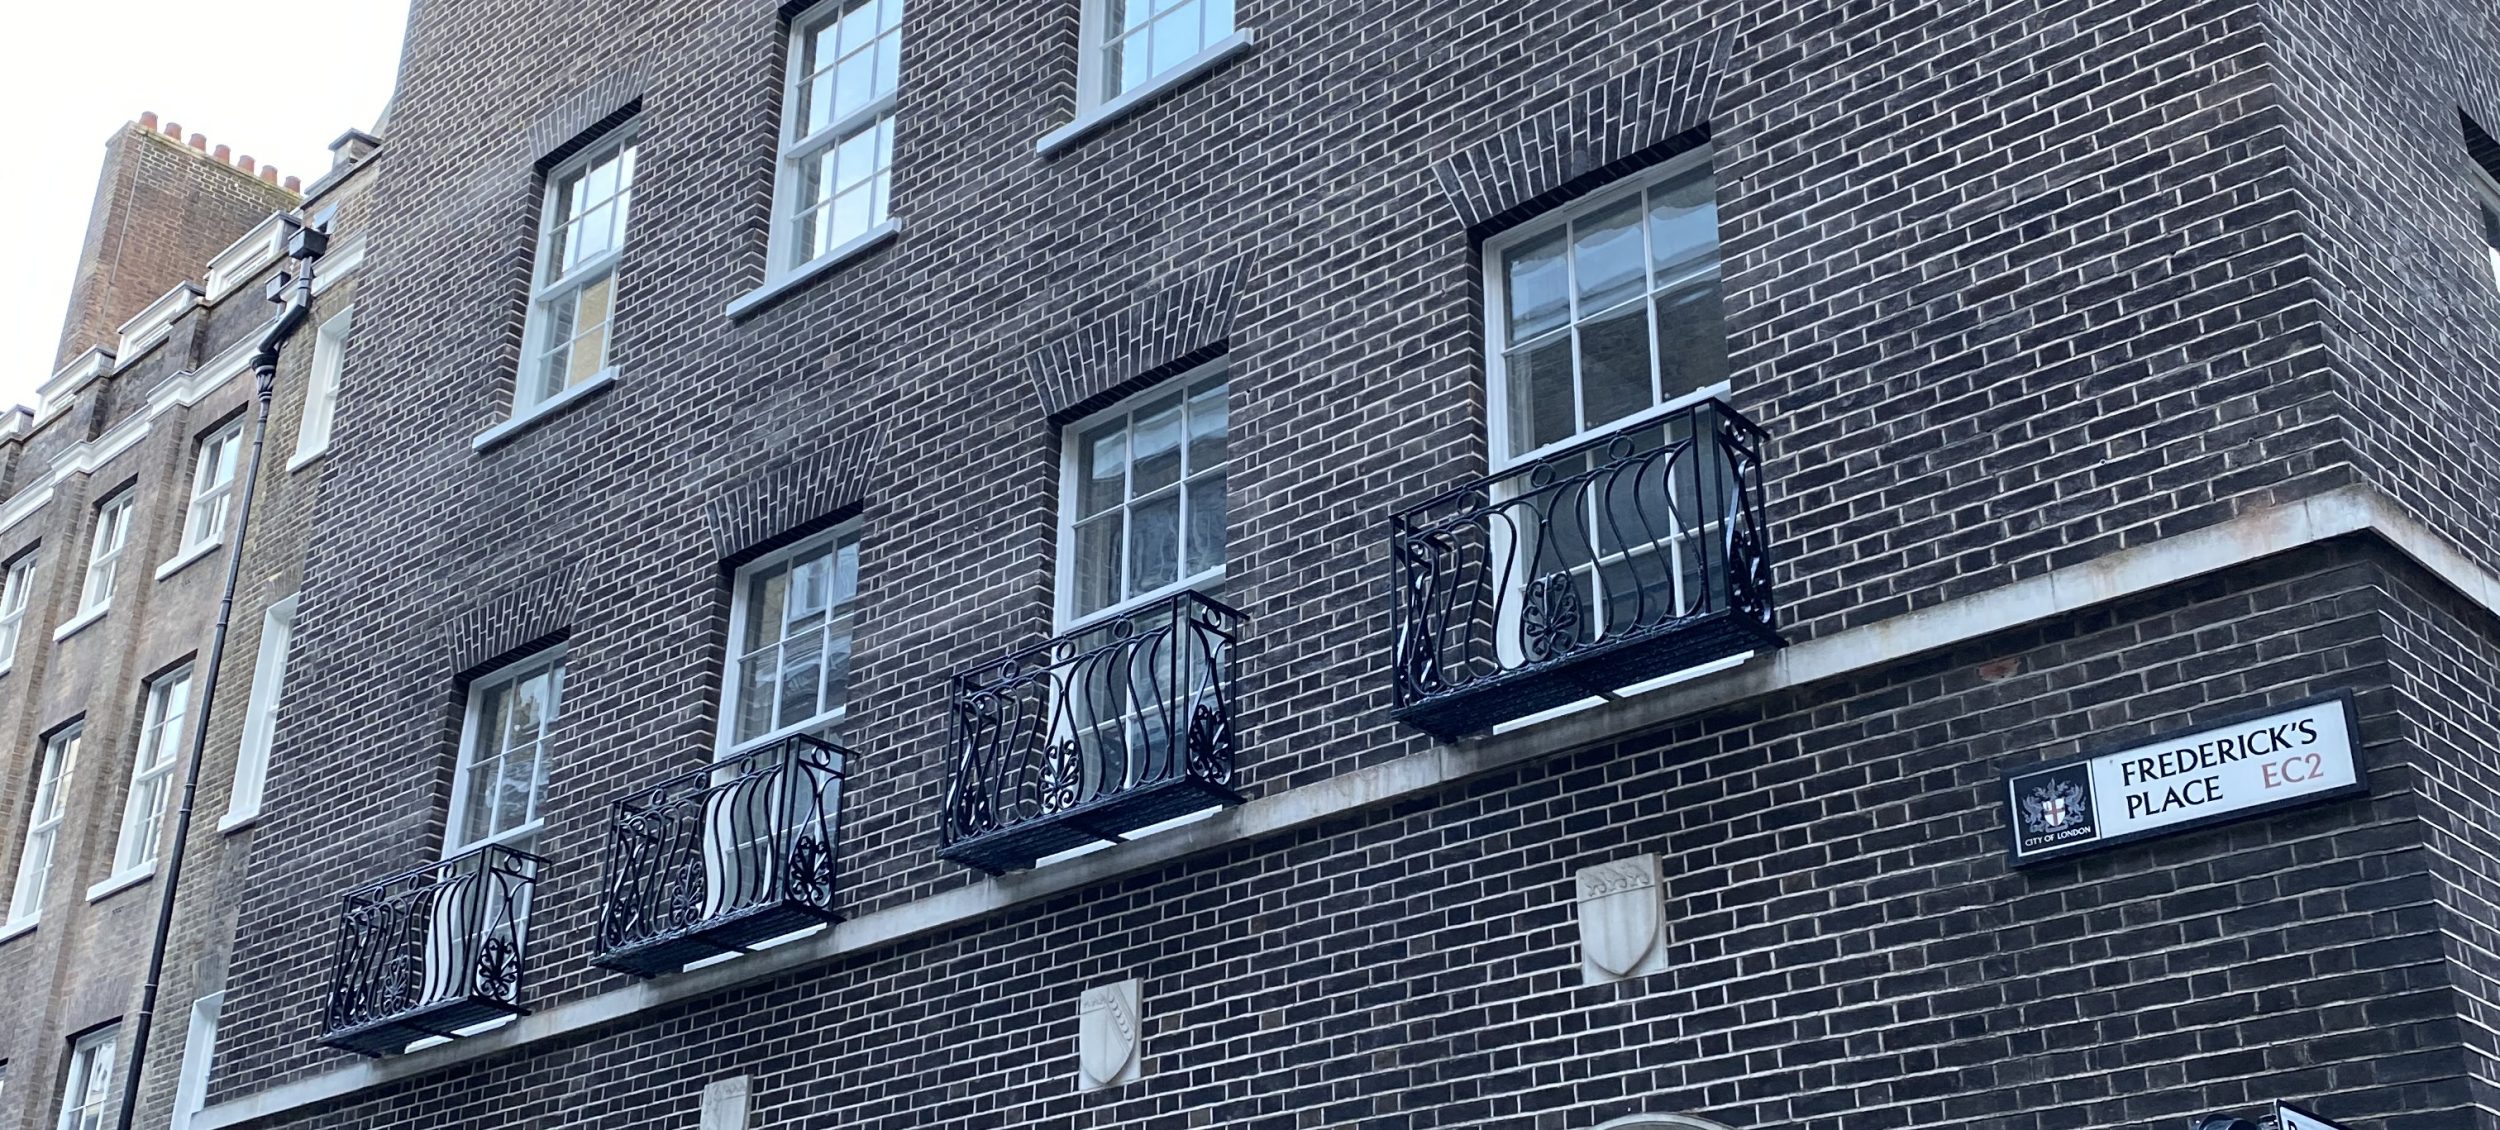 Sash windows at Frederick's place